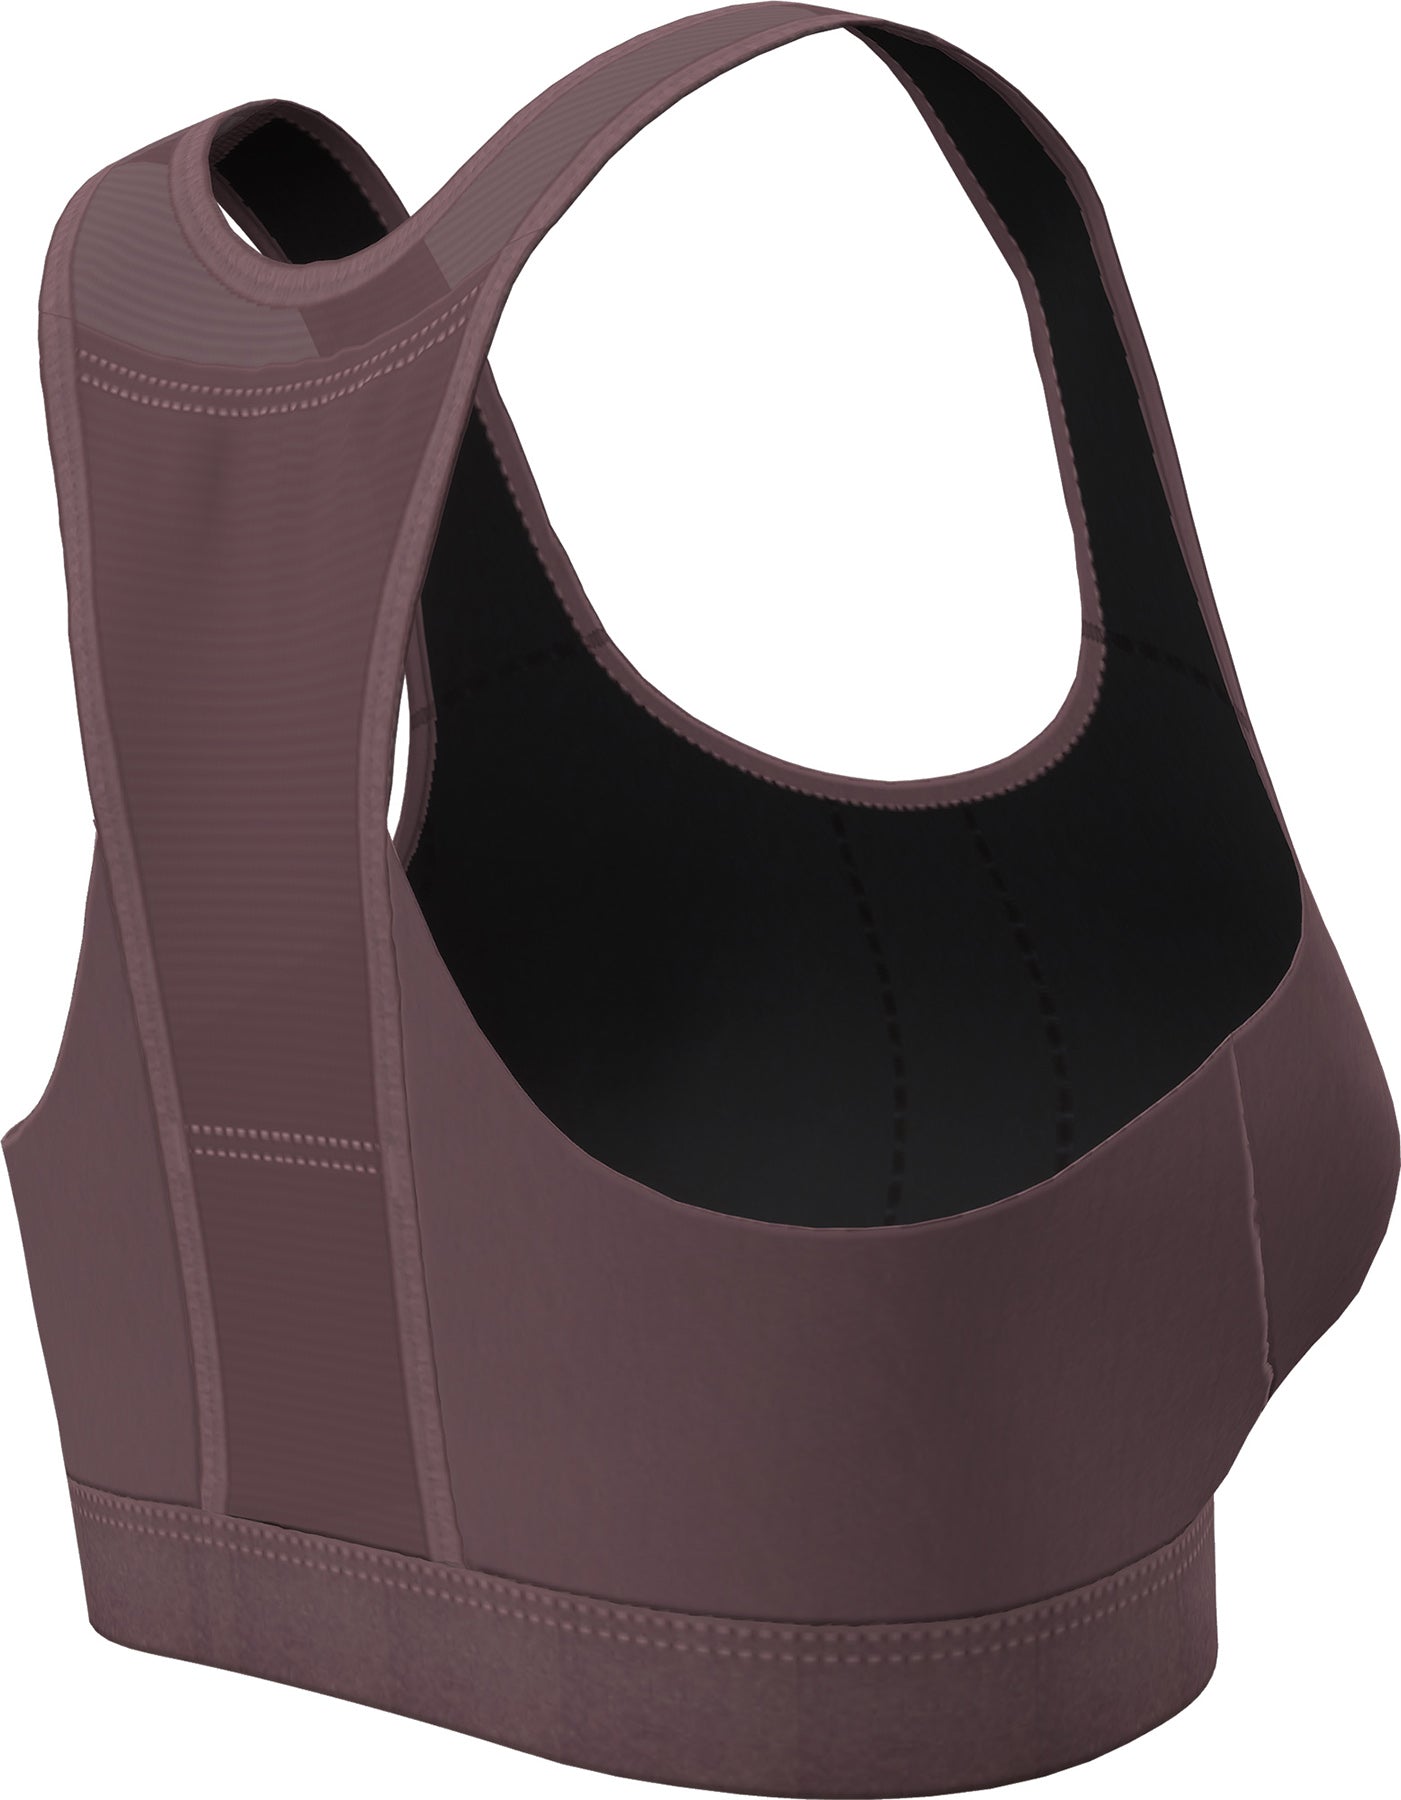 New Balance Sleek Medium Support Pocket Sports Bra 